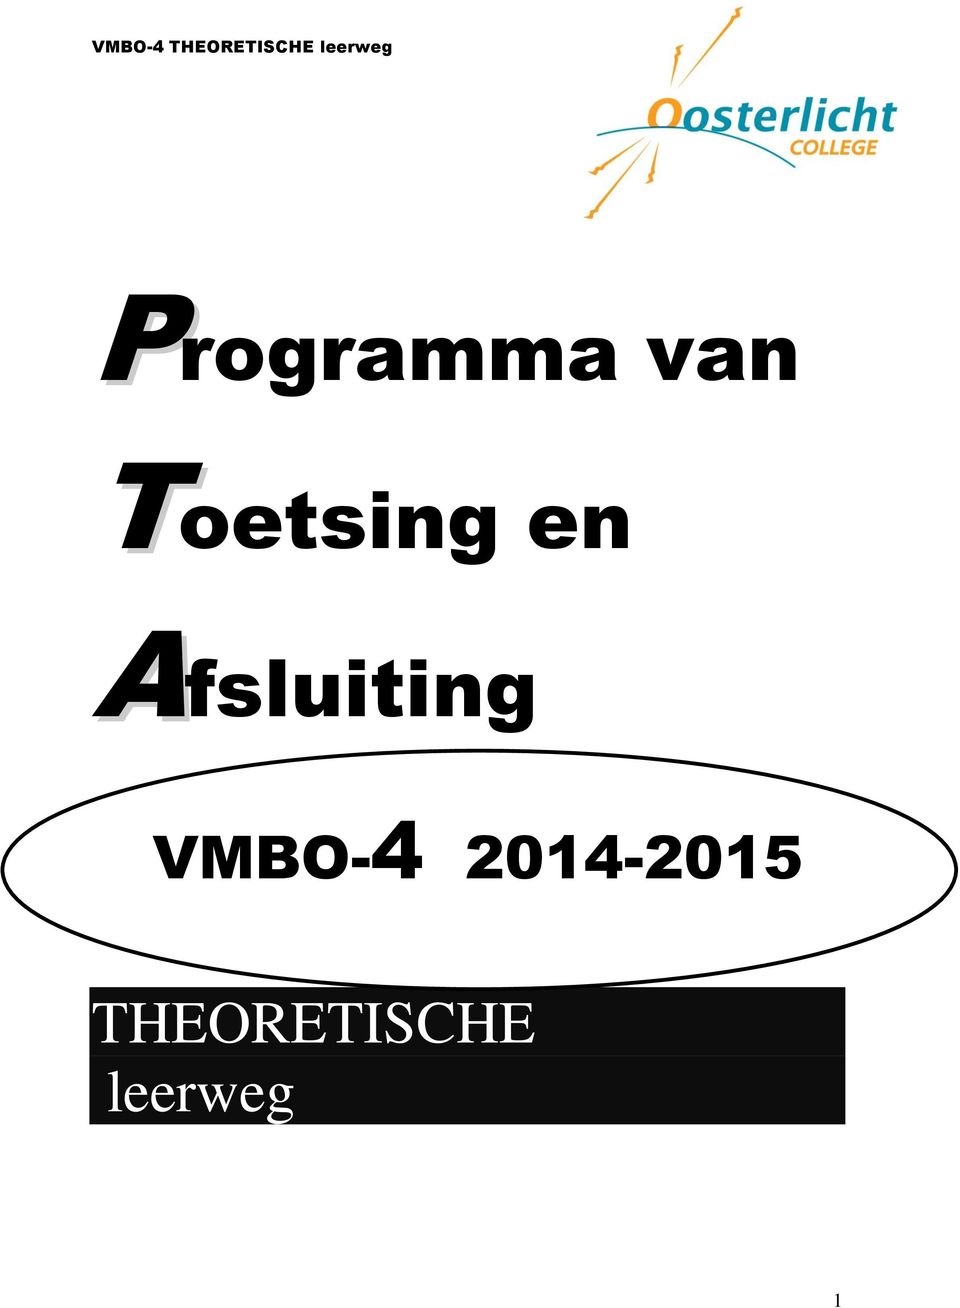 VMBO-4 2014-2015